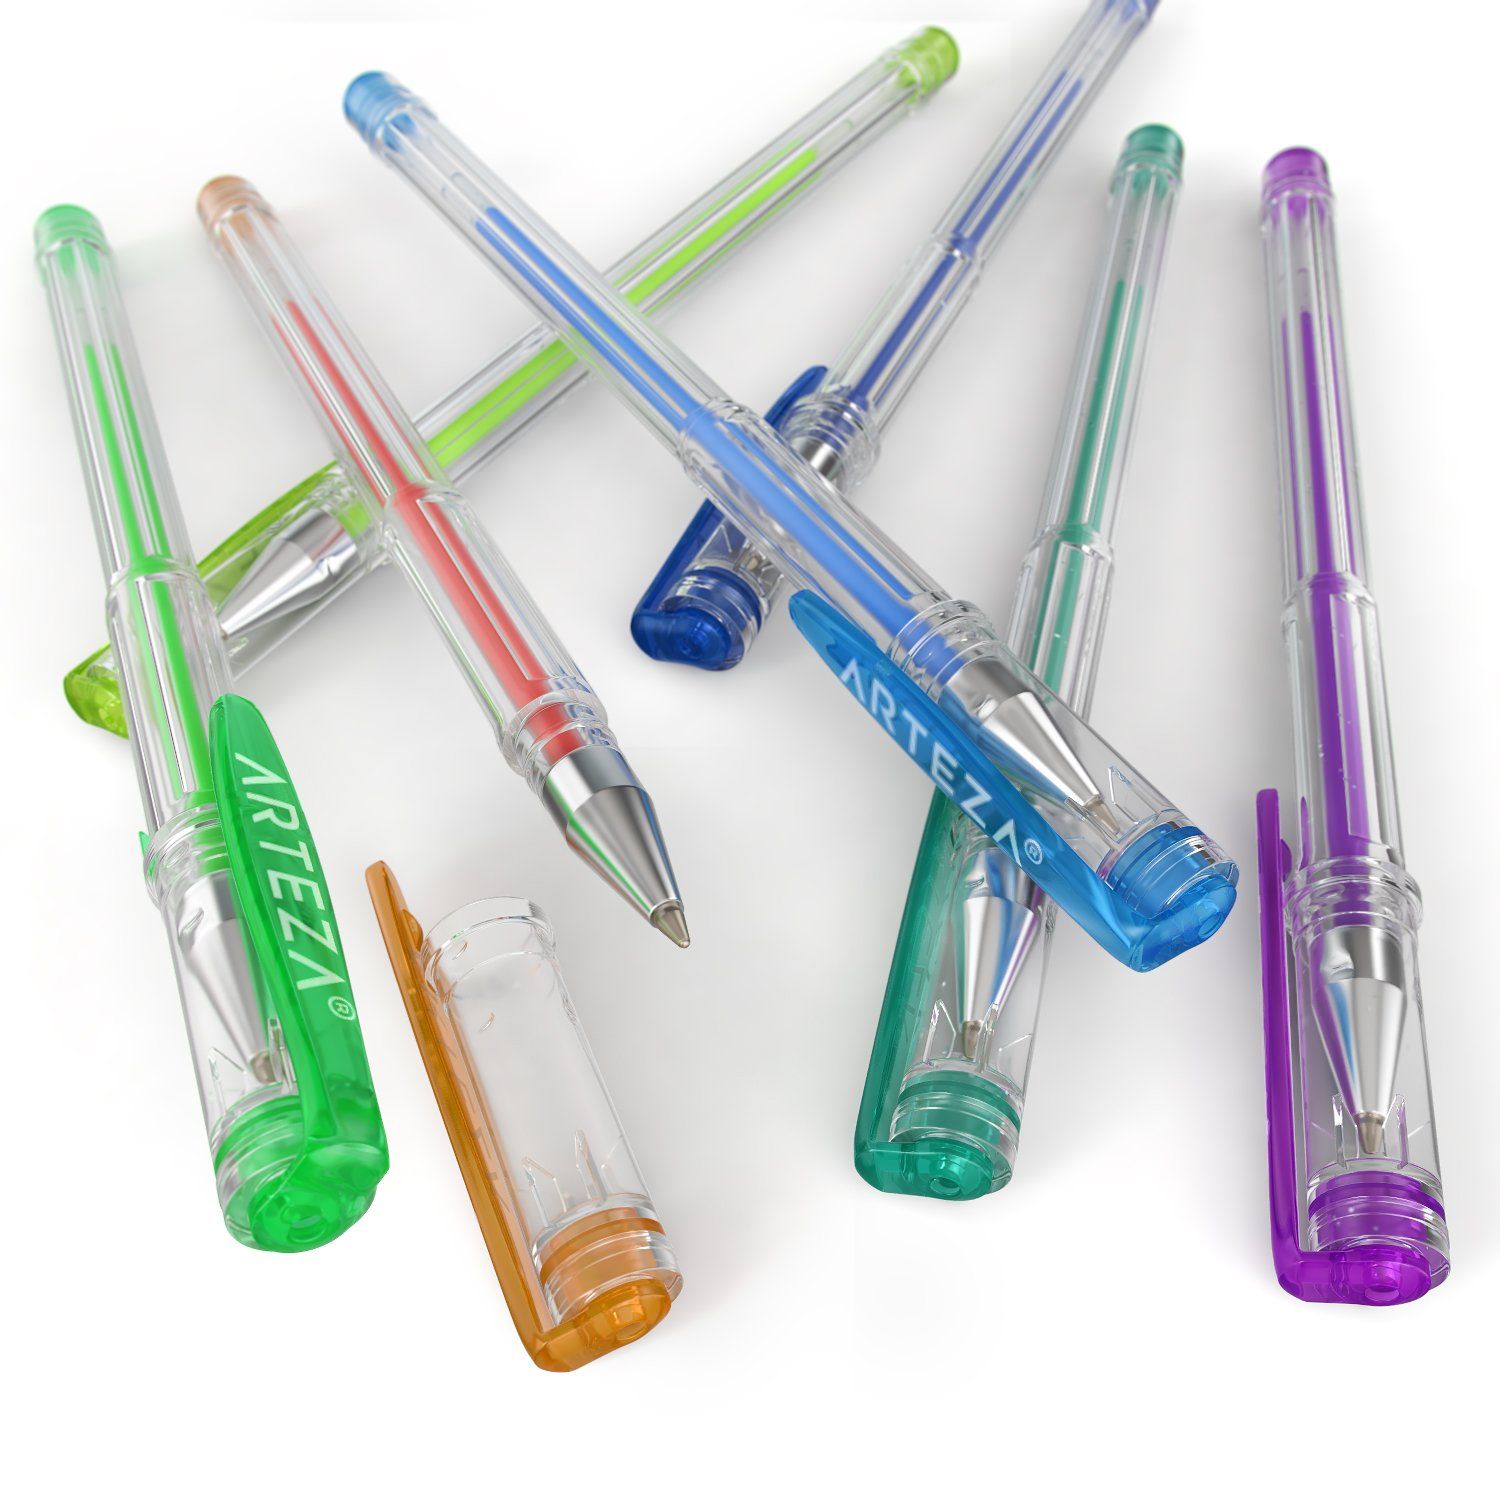 Arteza Gel Ink Colored Pens Set, Assorted Colors - Doodle, Draw